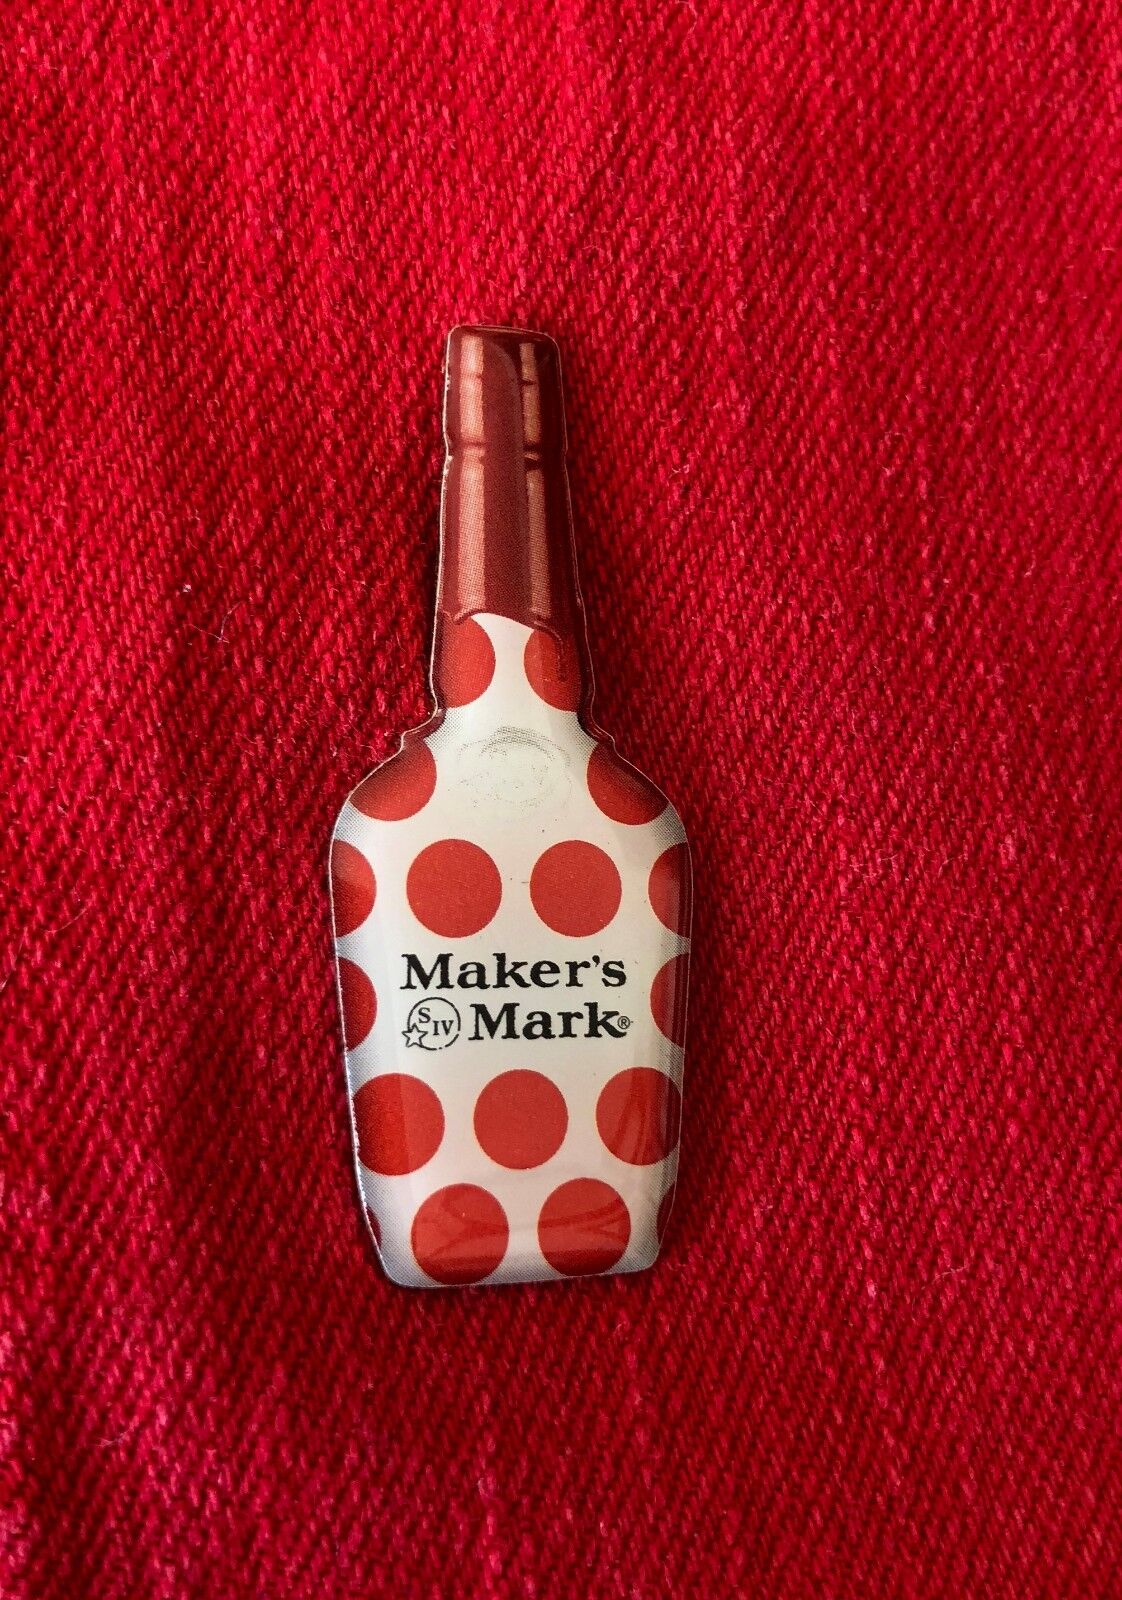 Makers Mark Whisky Whiskey Bottle Lapel Hat T-Shirt Pin